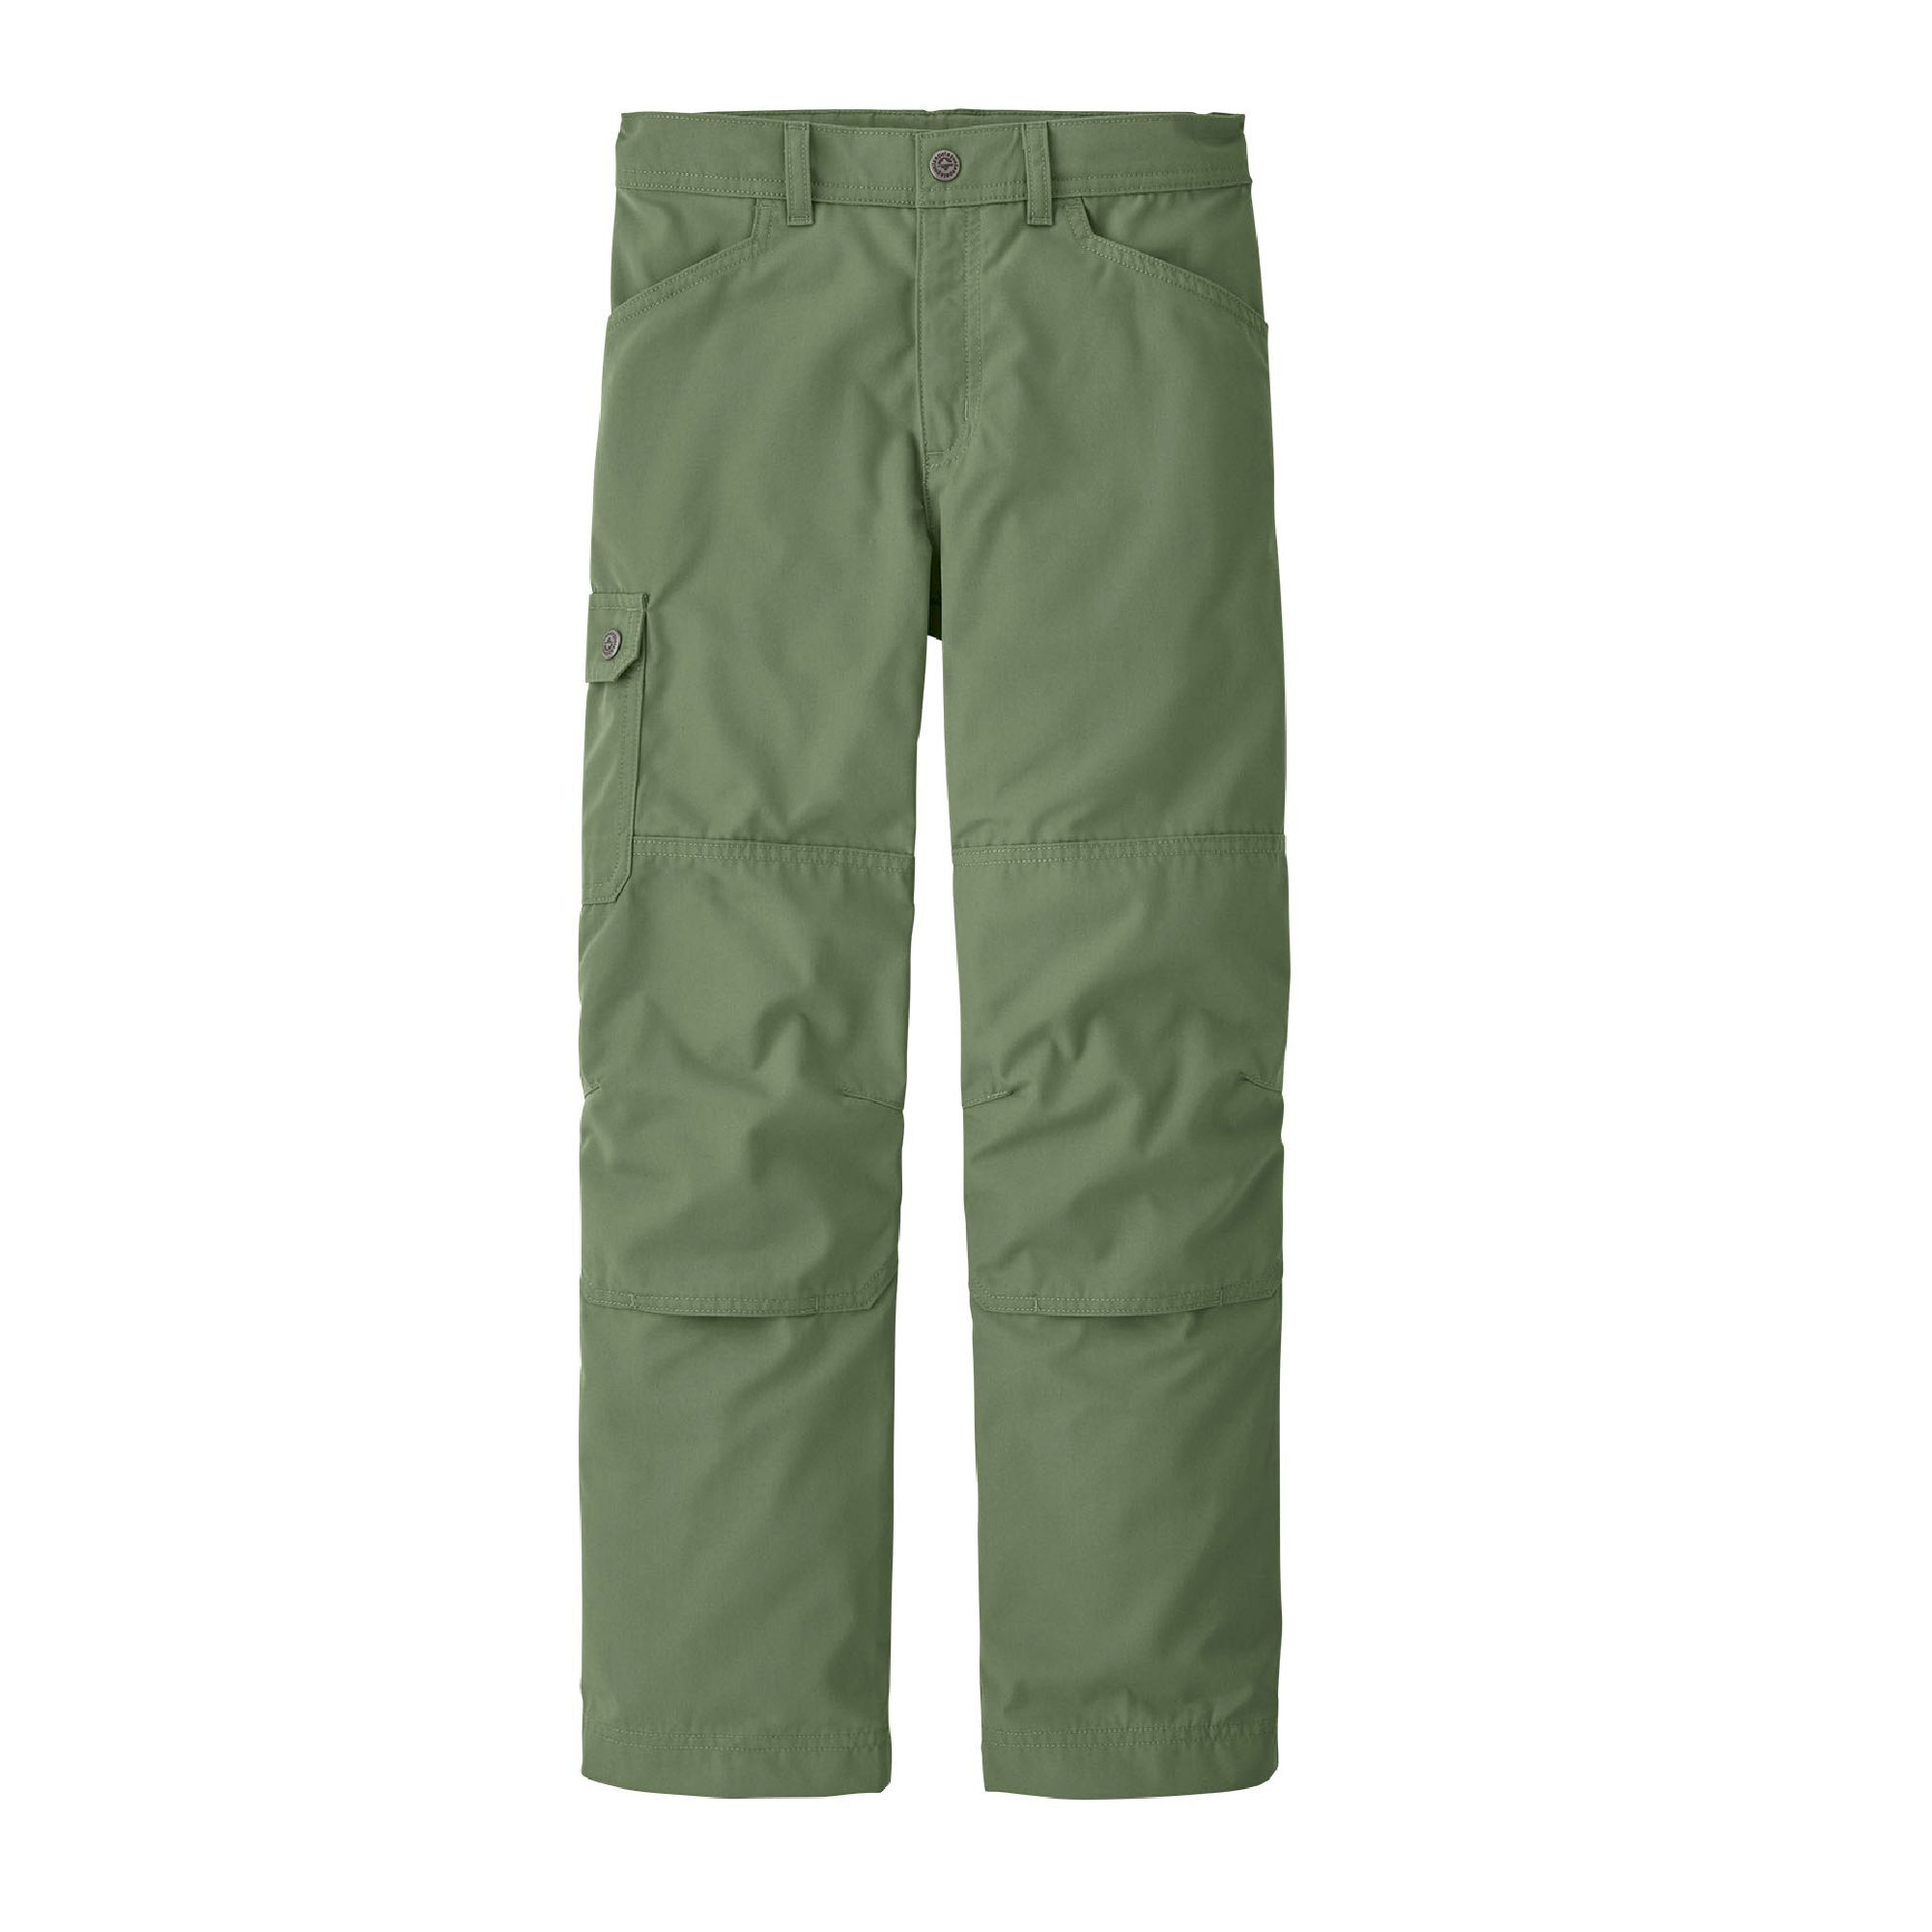 Patagonia Boys' Durable Hike Pants - Pantaloni da escursionismo - Bambino